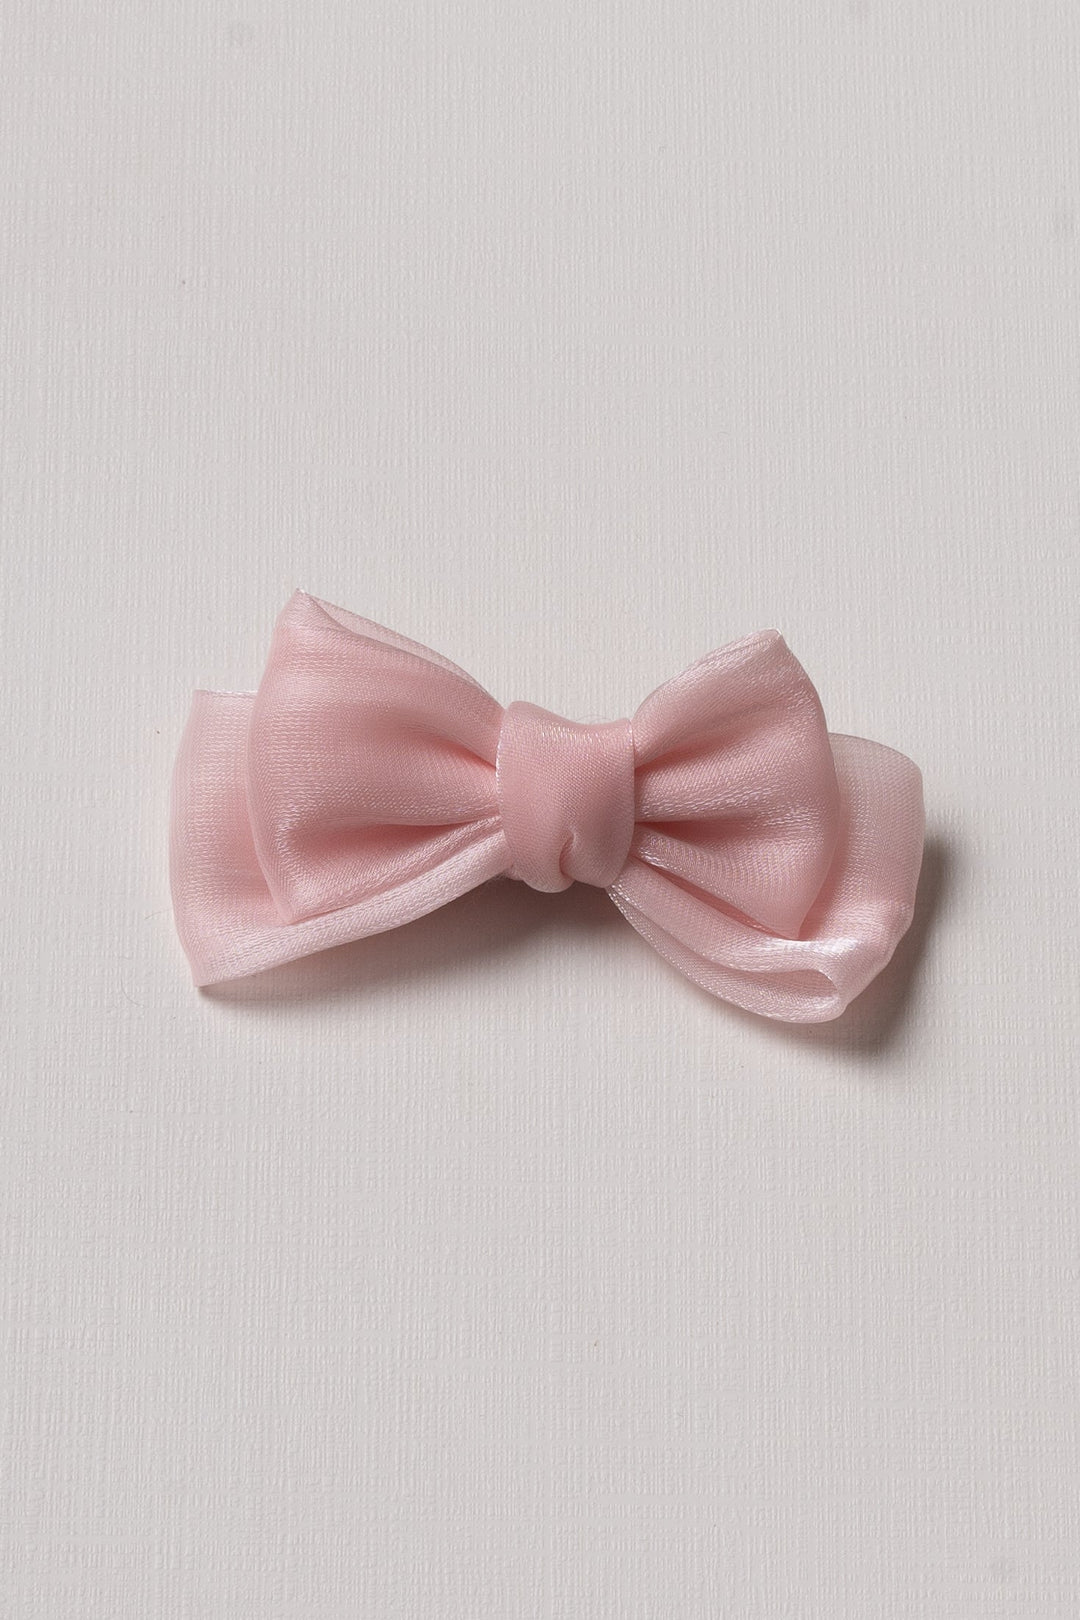 The Nesavu Hair Clip Blush Charm: Soft Pink Satin Bow Clip Nesavu Salmon JHCL77H Elegant Soft Pink Satin Bow Hair Clip for Girls | Gentle Charm Accessory | The Nesavu